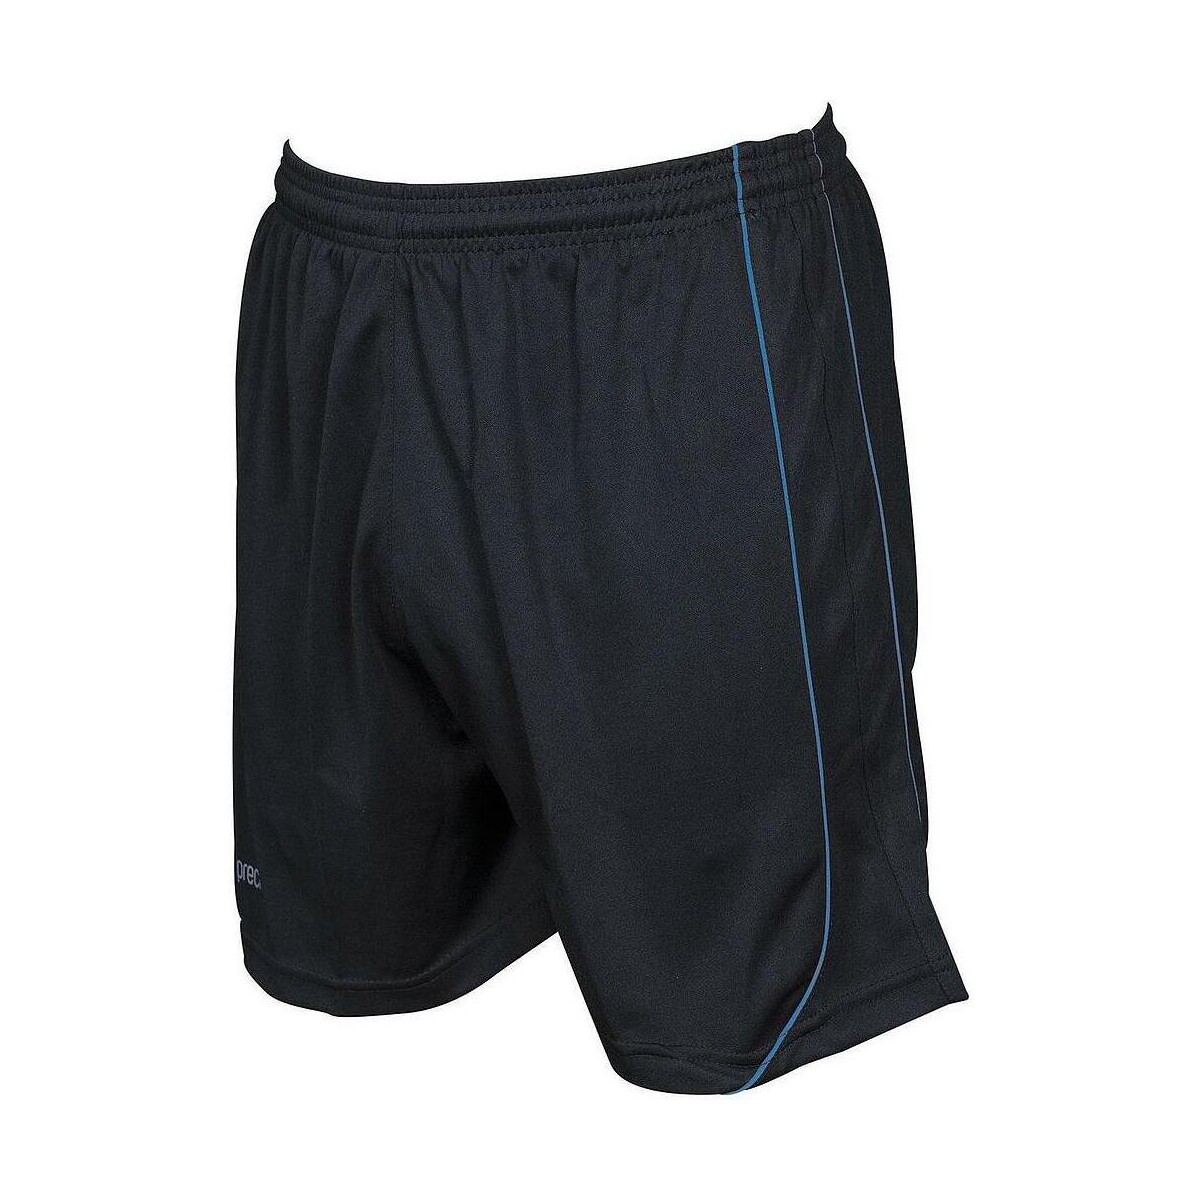 textil Shorts / Bermudas Precision Mestalla Negro